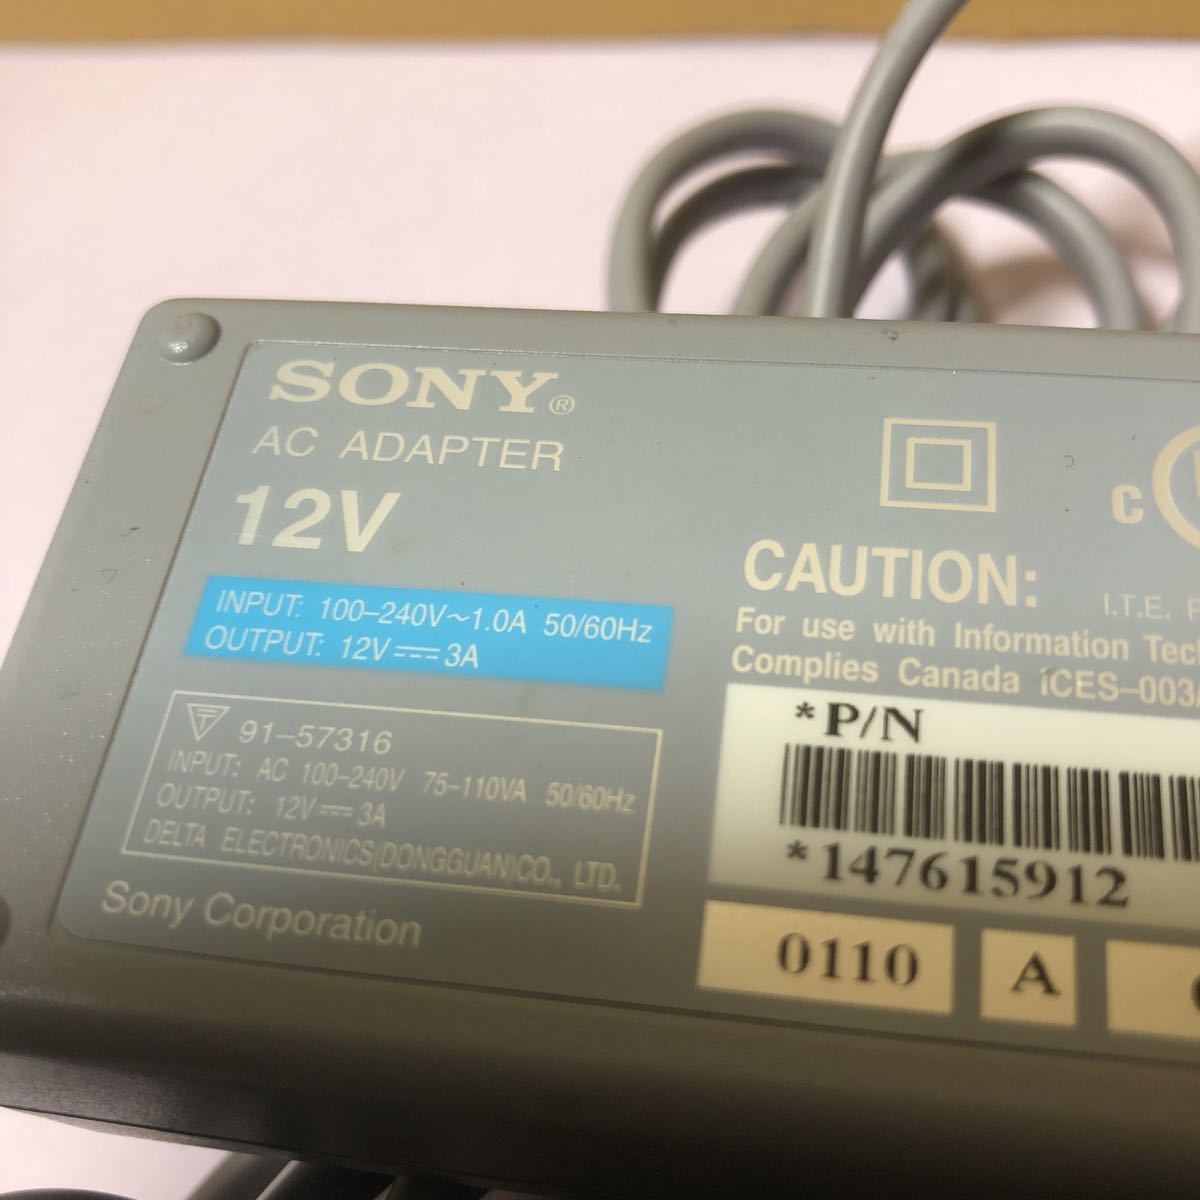 SONY  Sony ACC-15XD 12V 3A AC адаптер  подержанный товар  рабочий товар  SHA574